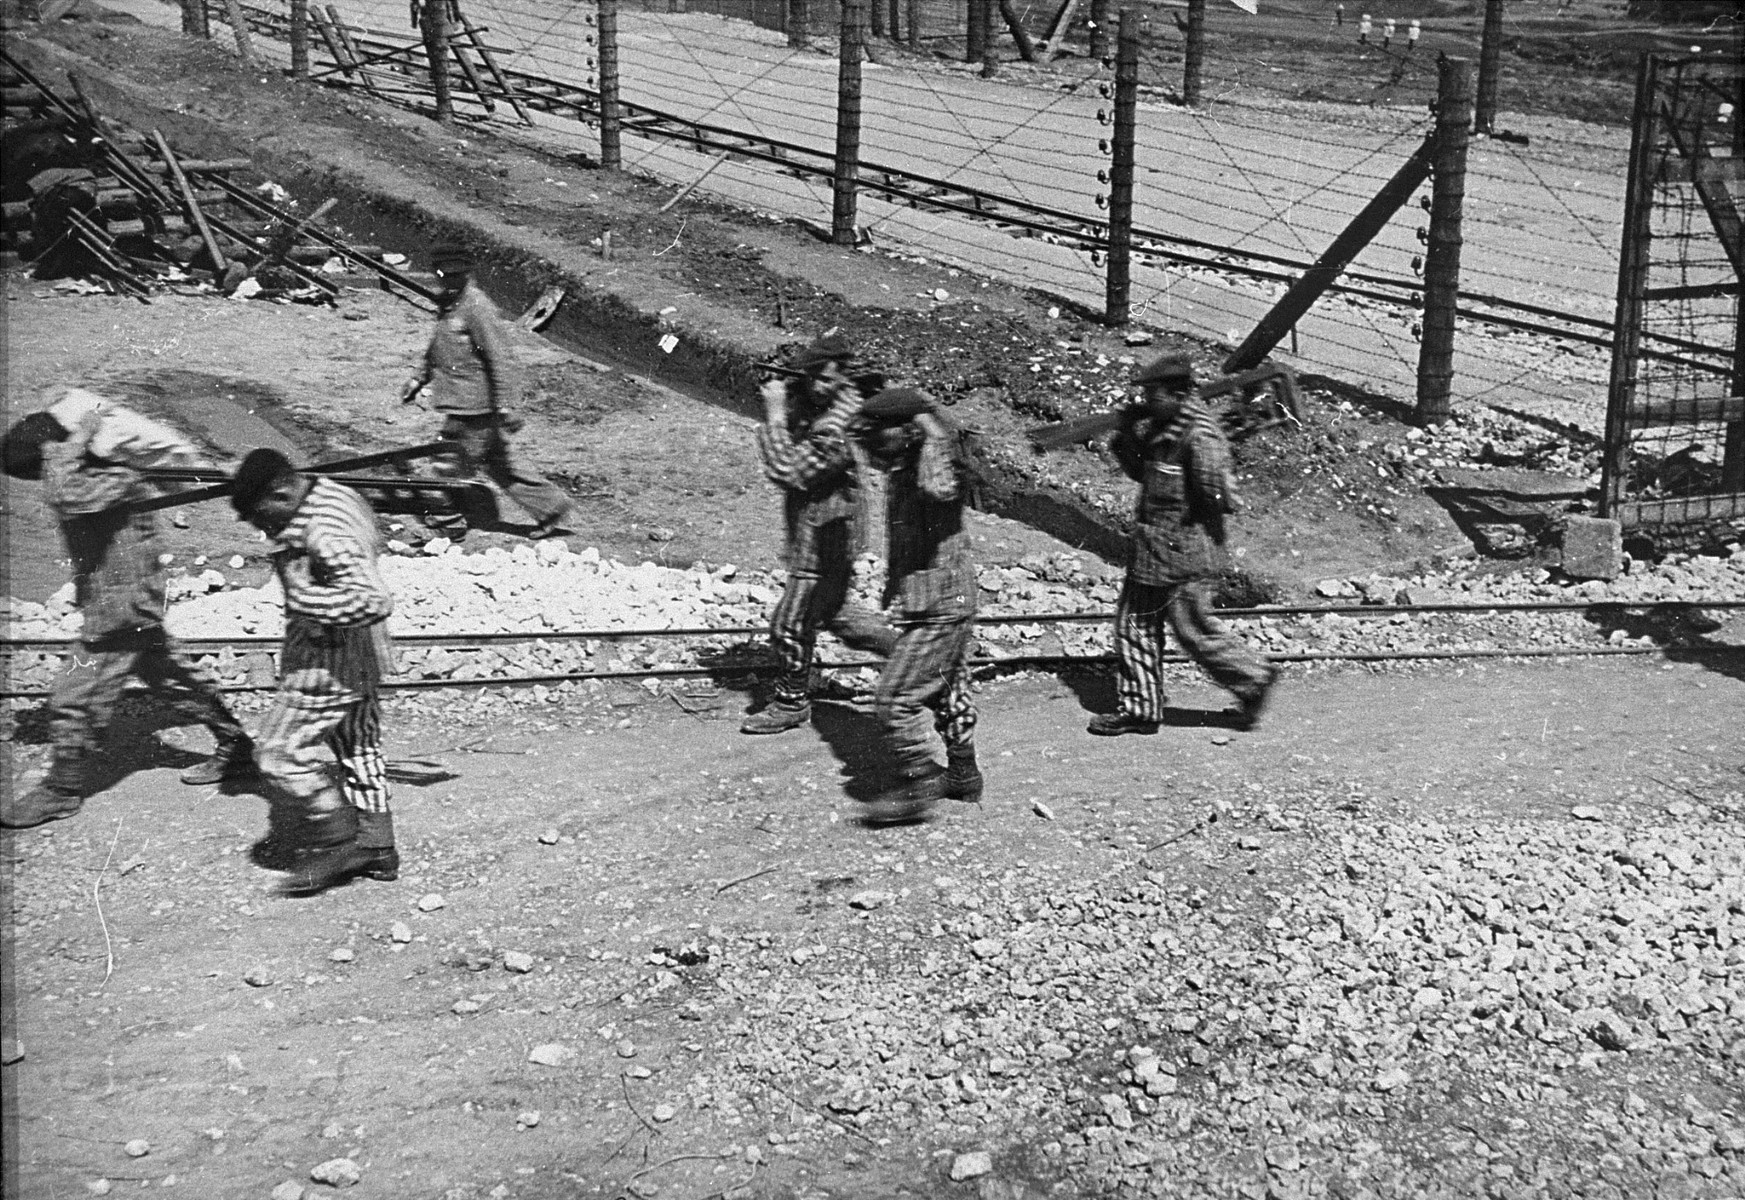 Jewish prisoners in Plaszow at forced labor.